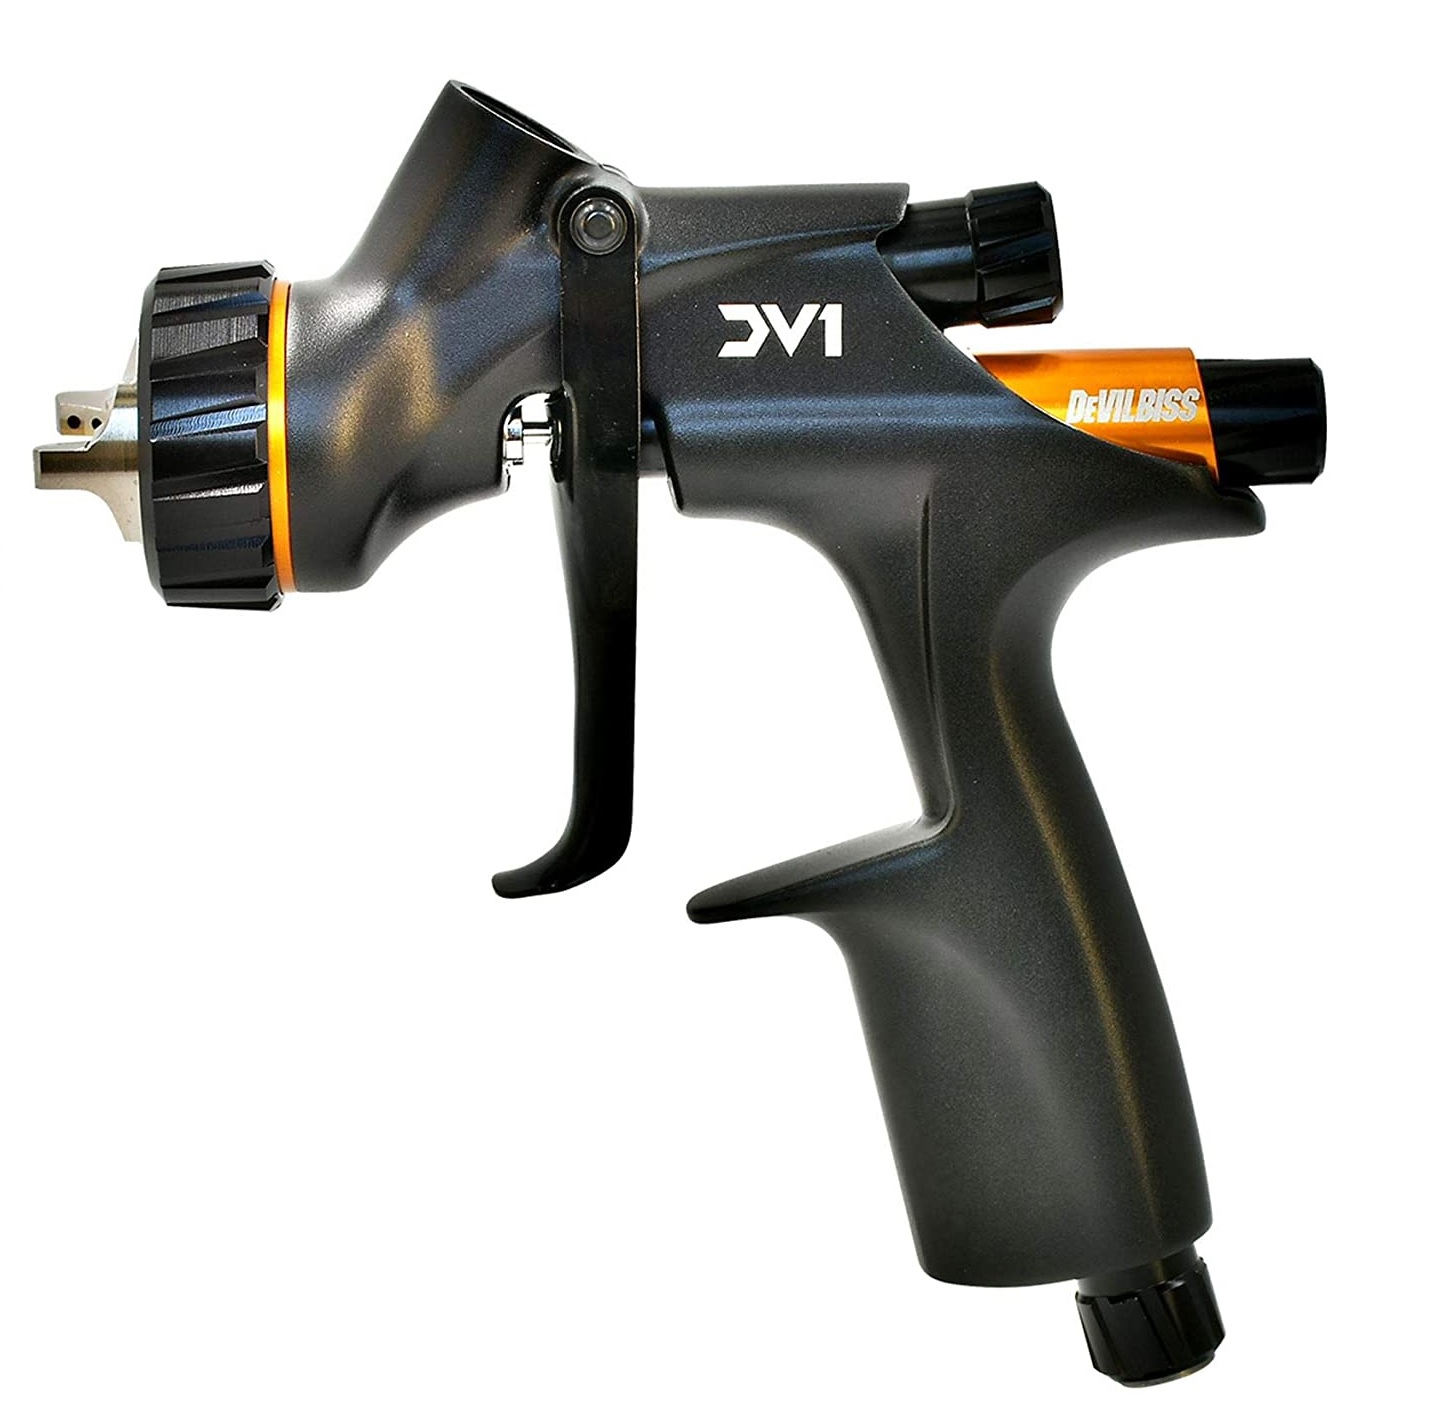 Pistola de Pintura Profissional DeVilbiss DV1-C Clearcoat própria para Verniz sem manômetro digital - Devilbiss